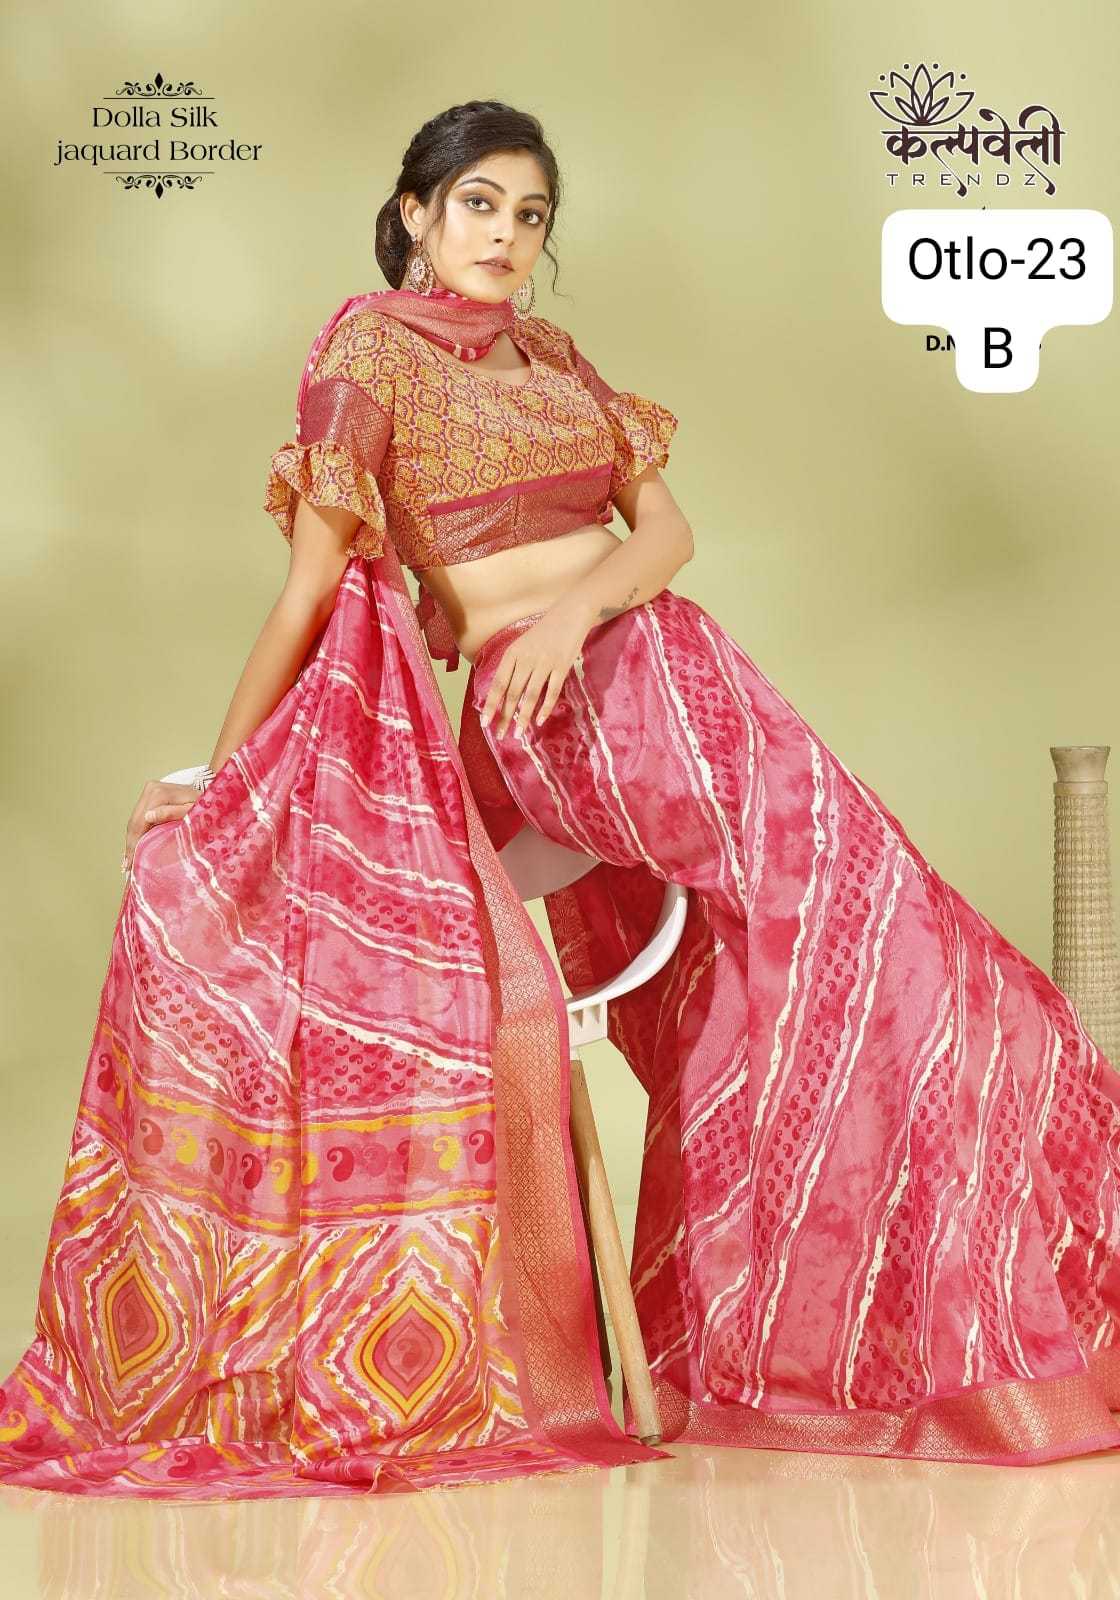 Kalpavelly trendz otlo 23 dola silk new design saree wholesaler